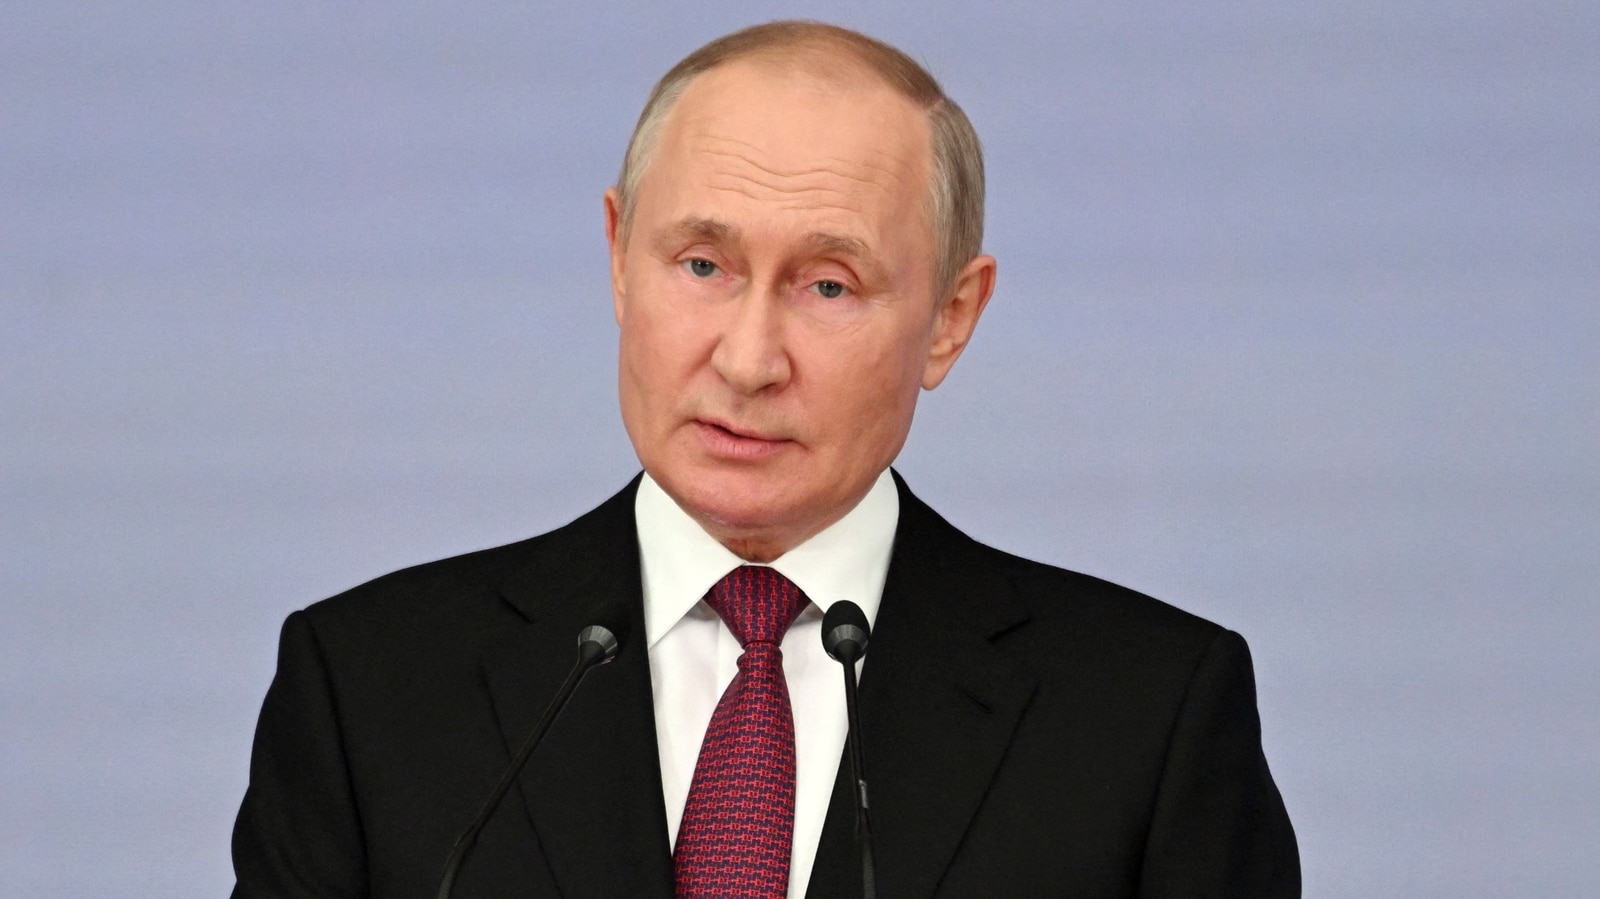 Ex-Vladimir Putin ally threatens London with nukes: Report